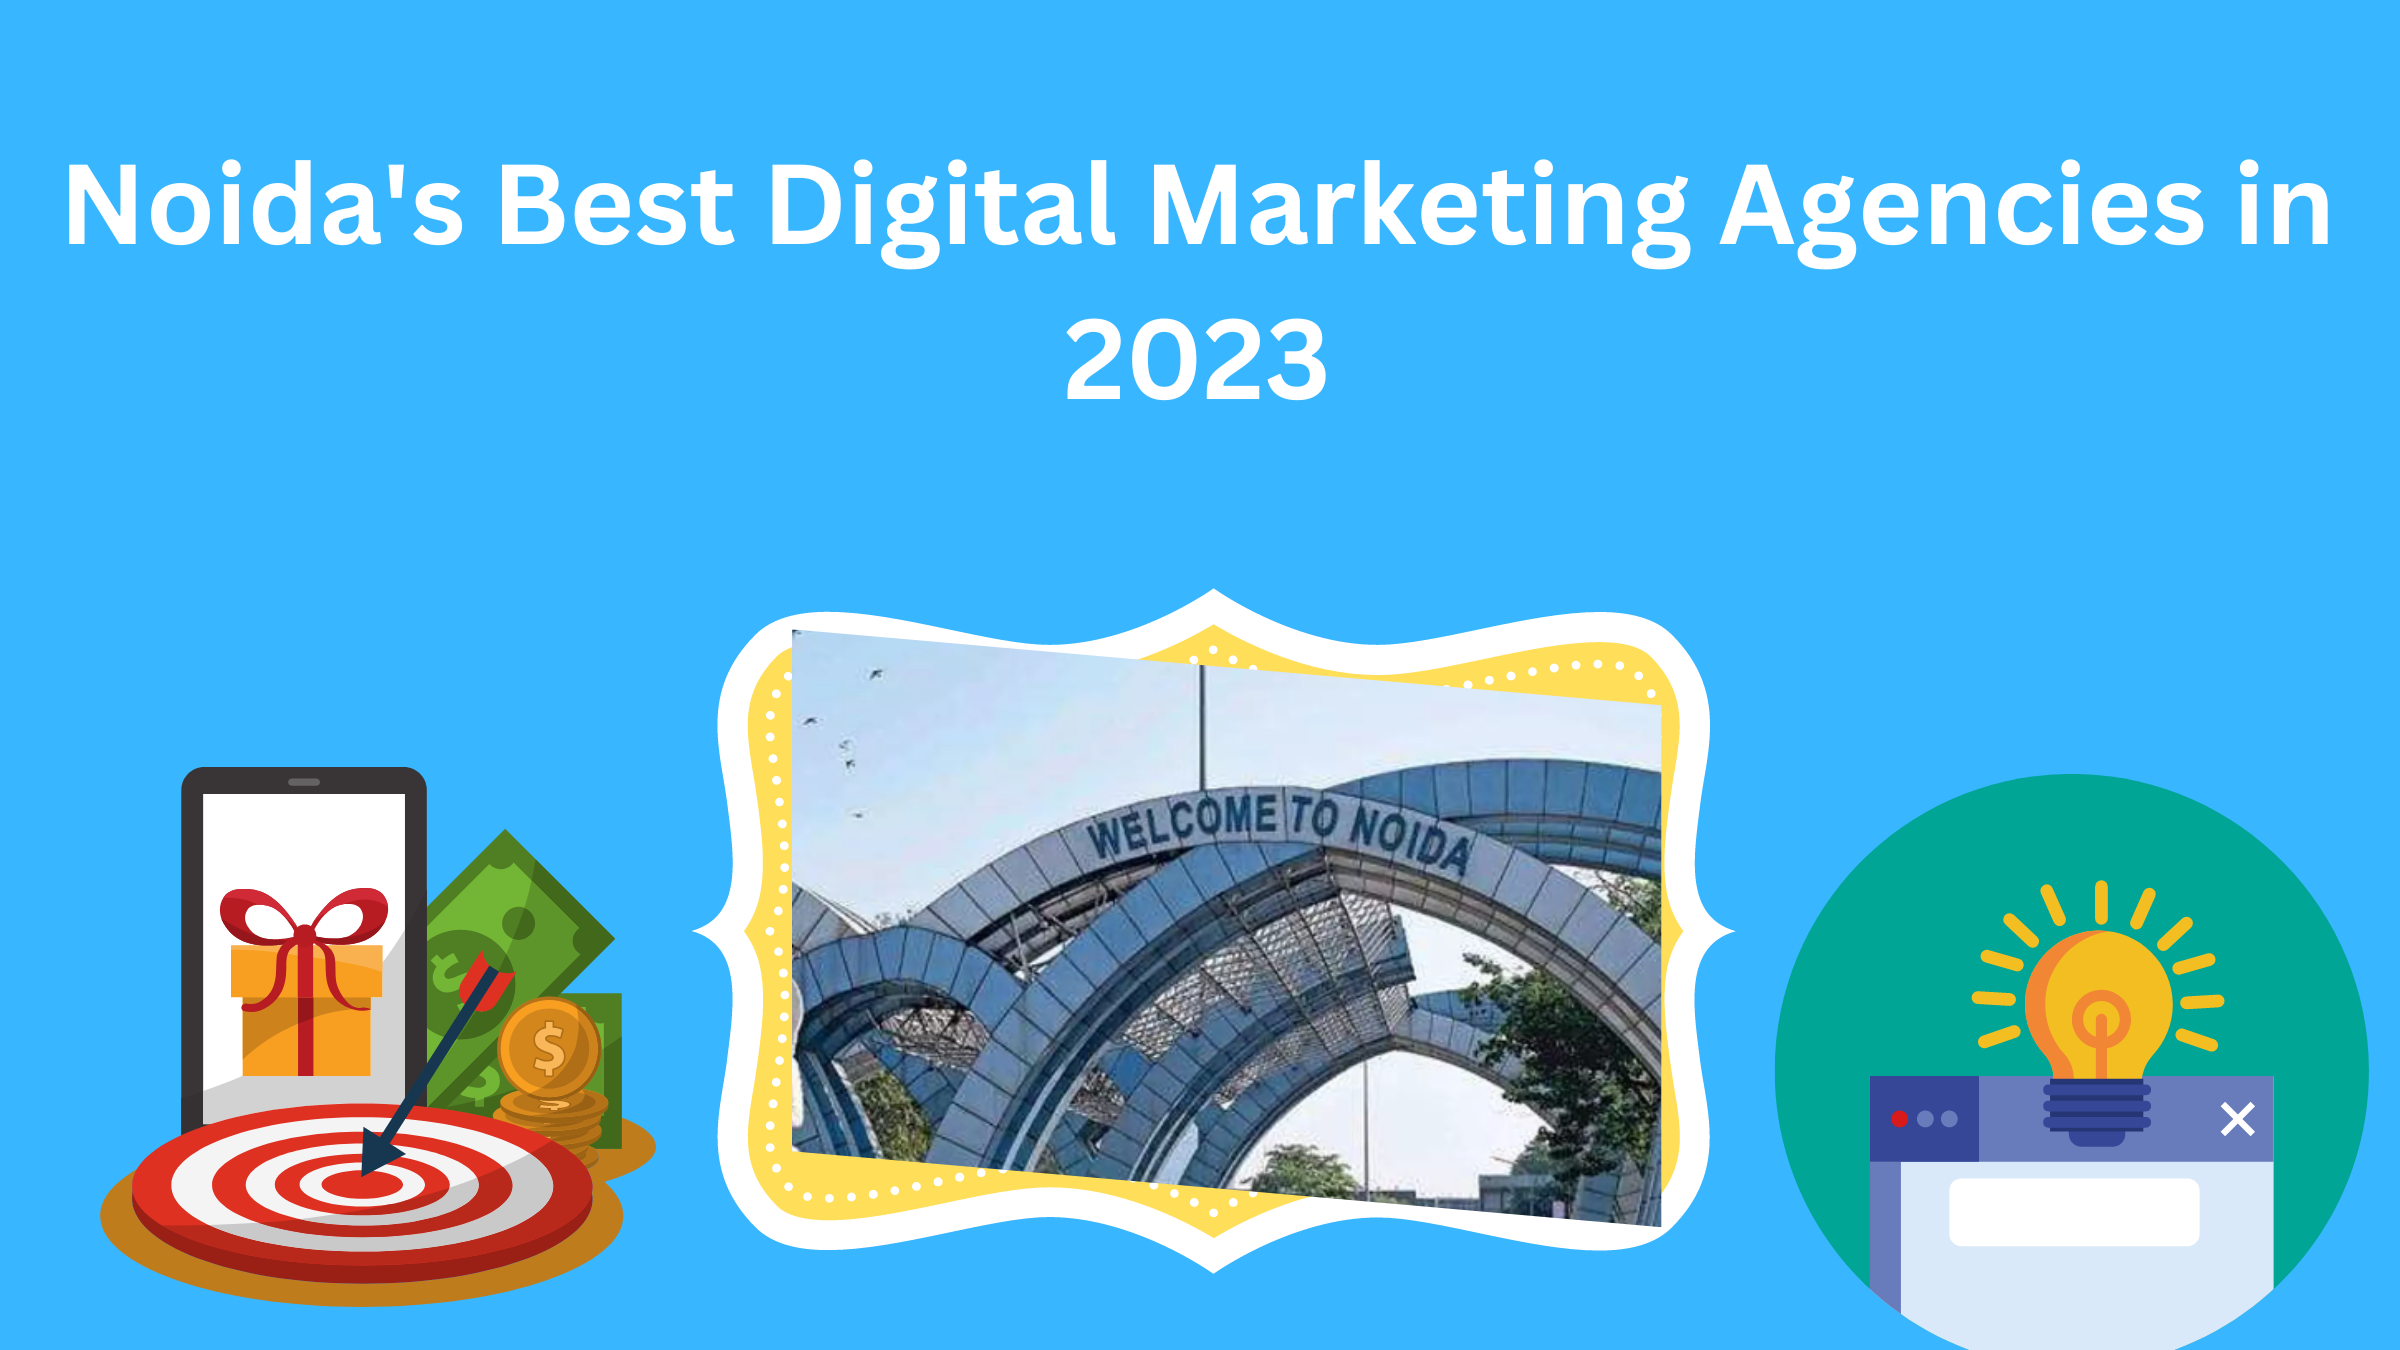 Noida's Best Digital Marketing Agencies - Illuminating Success in the Digital Landscape